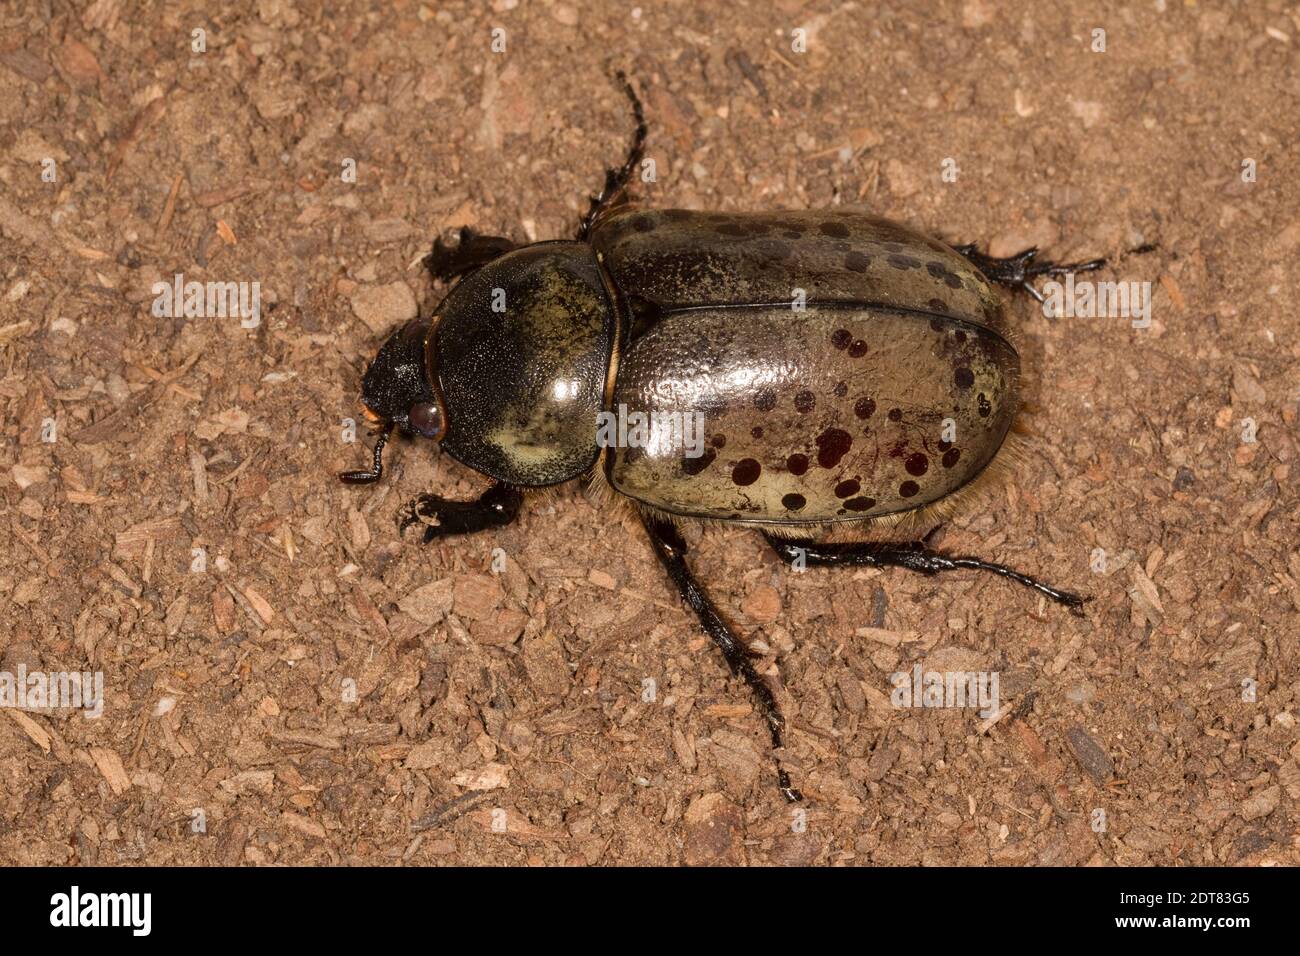 Grant's Hercules Käfer weiblich, Dynastes grantii, Scarabaeidae. Gehäuselänge 48 mm. Stockfoto